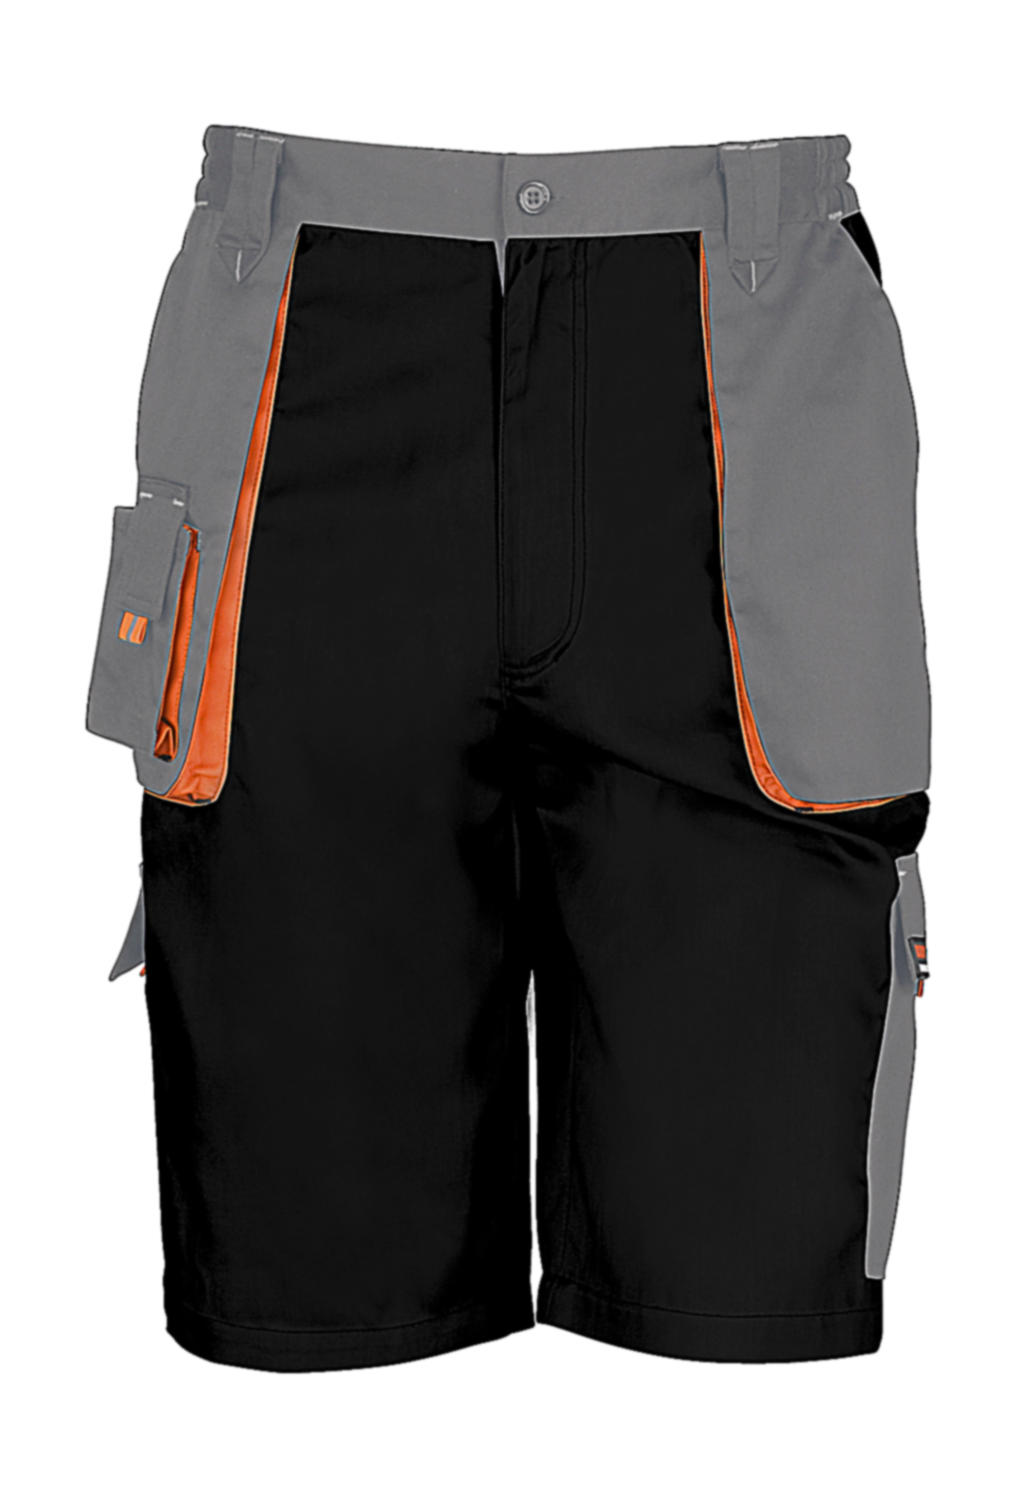 Krátke nohavice LITE - black/grey/orange